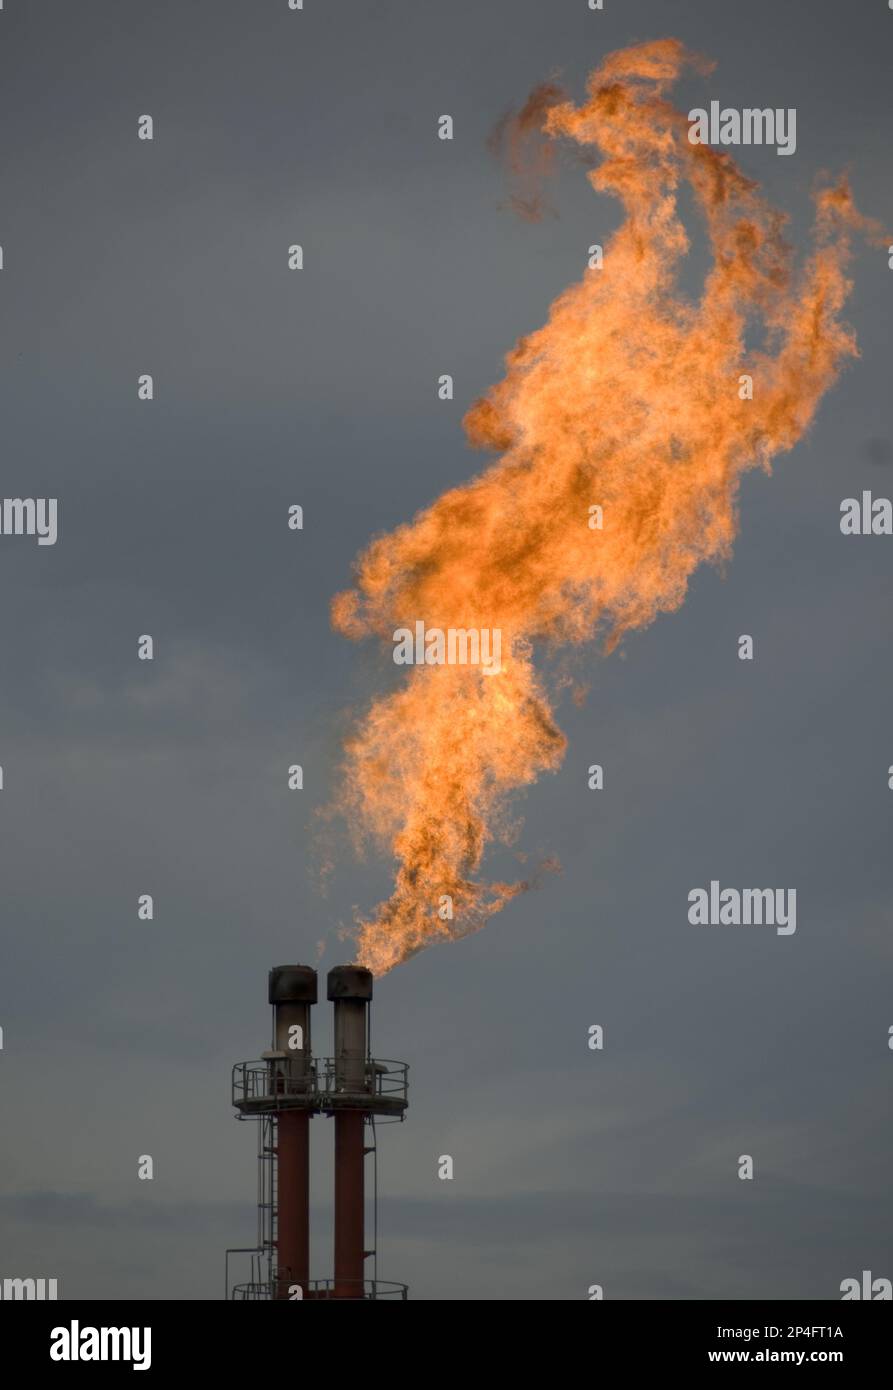 Gas flare from chimney, Tangguh LNG (Liquified Natural Gas) plant, Bintuni Bay, West Papua (Irian Jaya), Indonesia Stock Photo